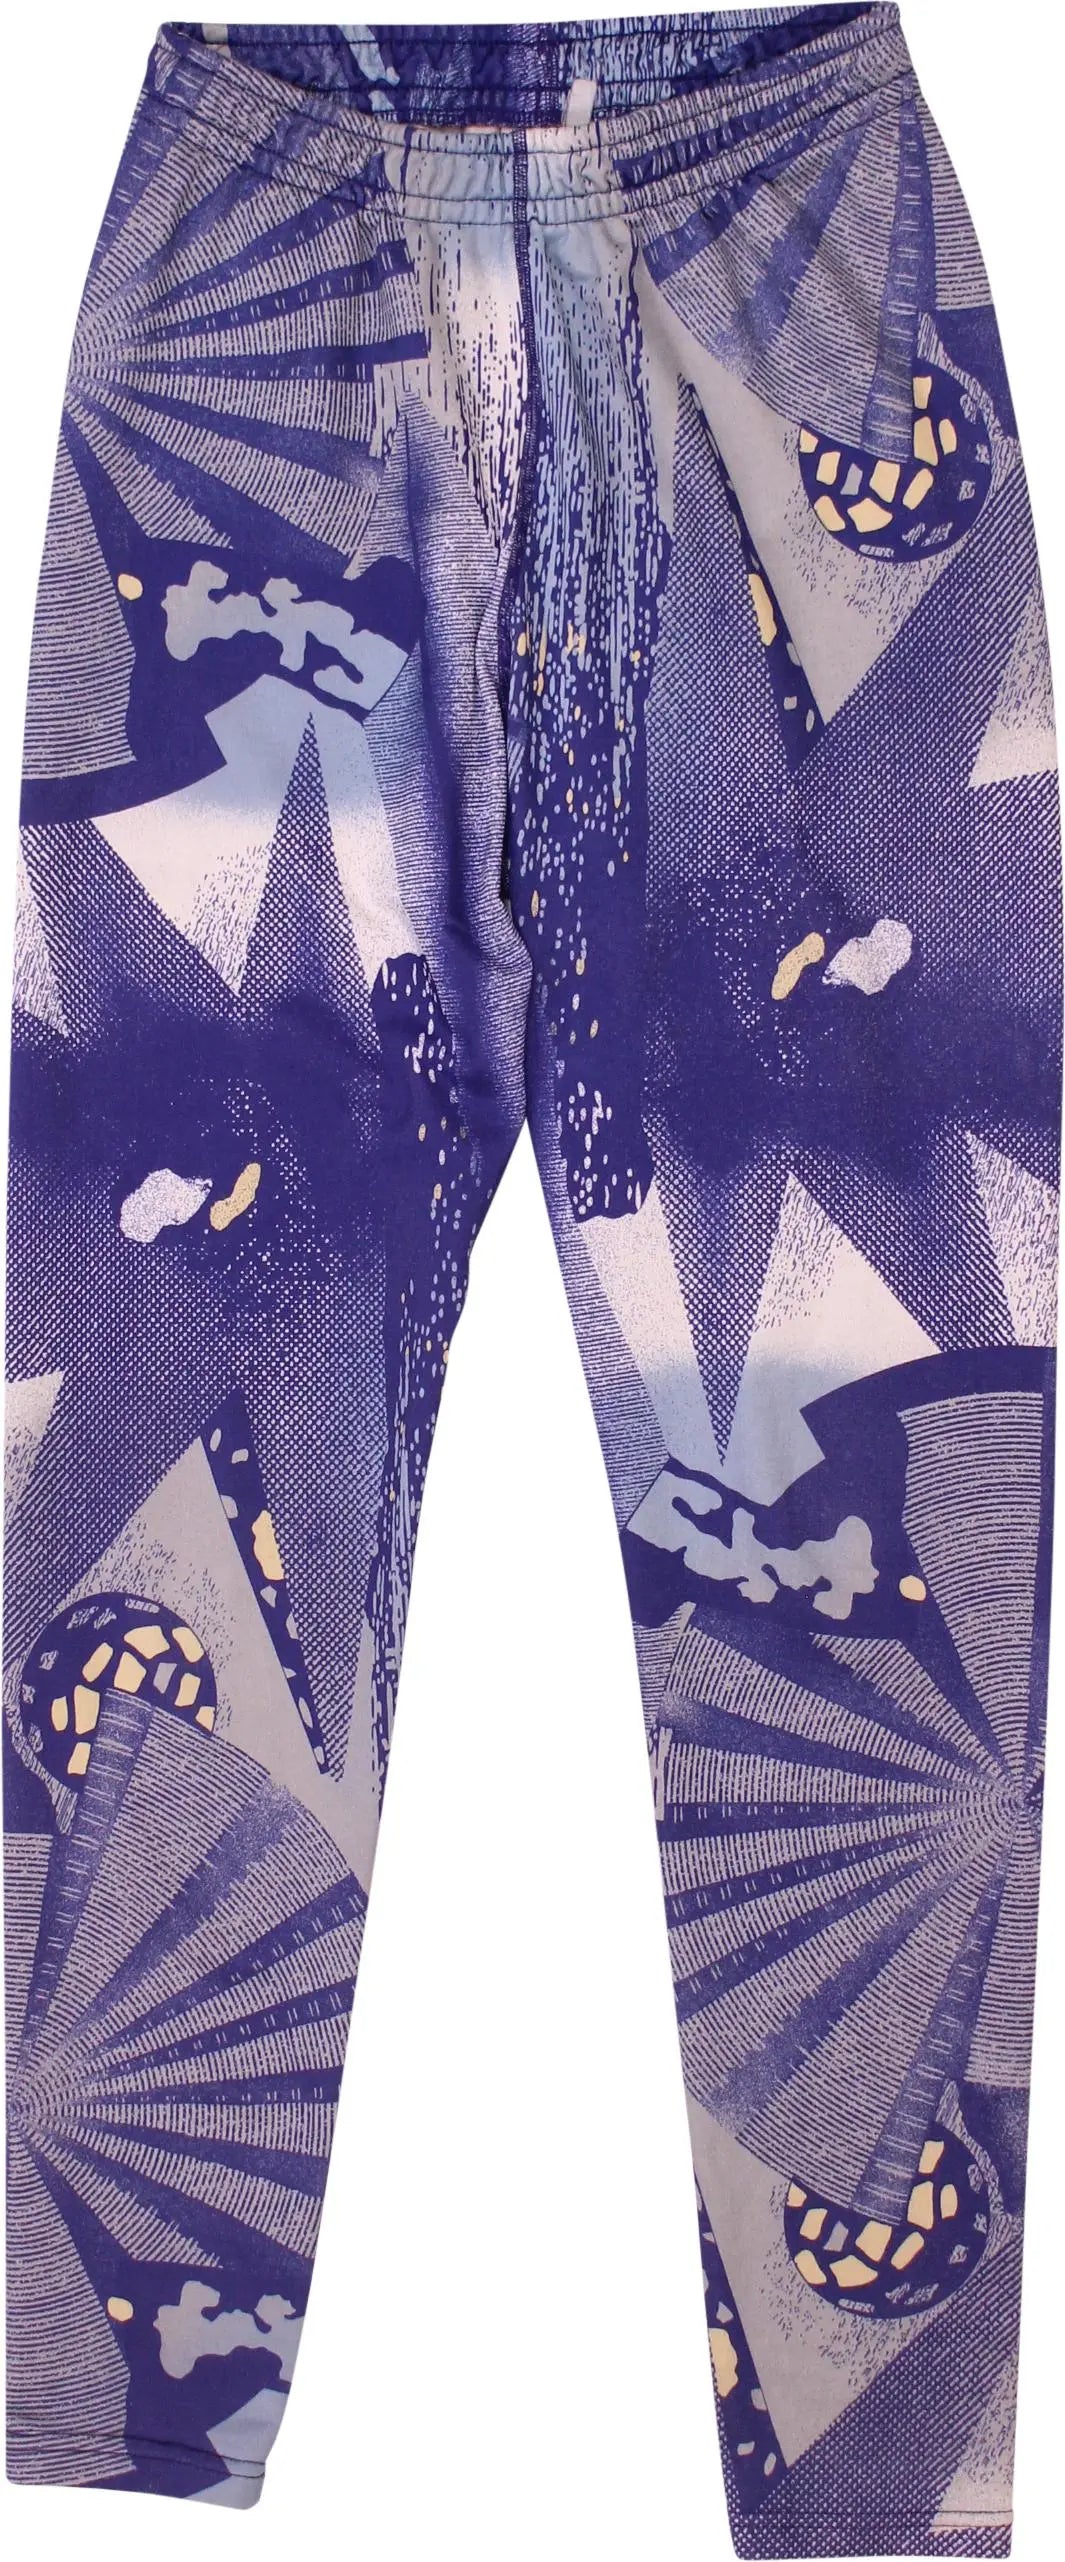 Odlo - Blue Graphic Sport Legging- ThriftTale.com - Vintage and second handclothing